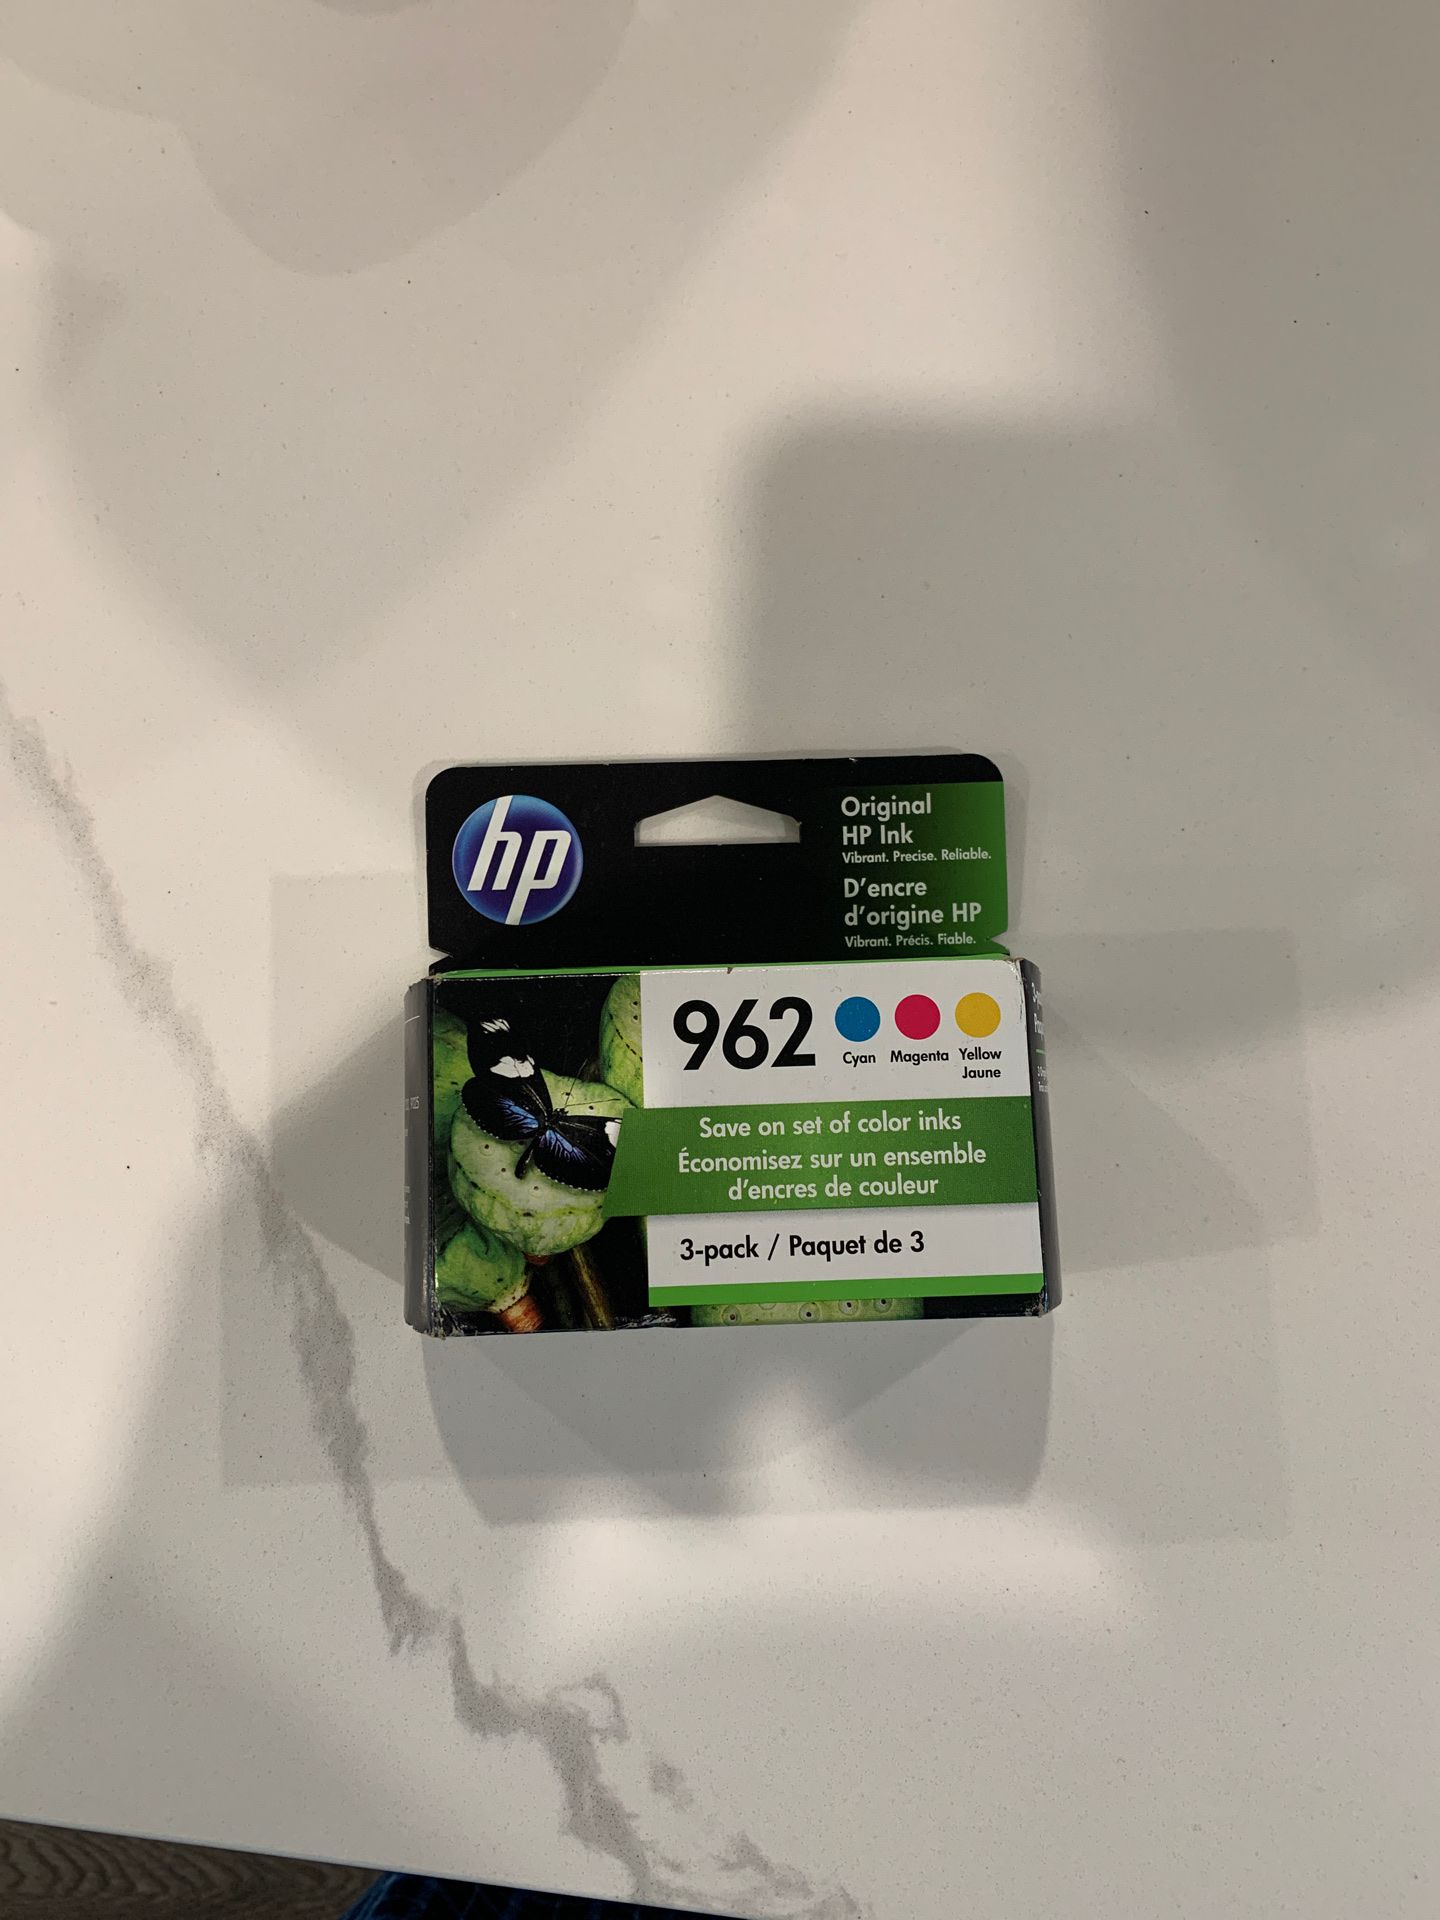 HP Original 962 color ink 3-pack, new in box